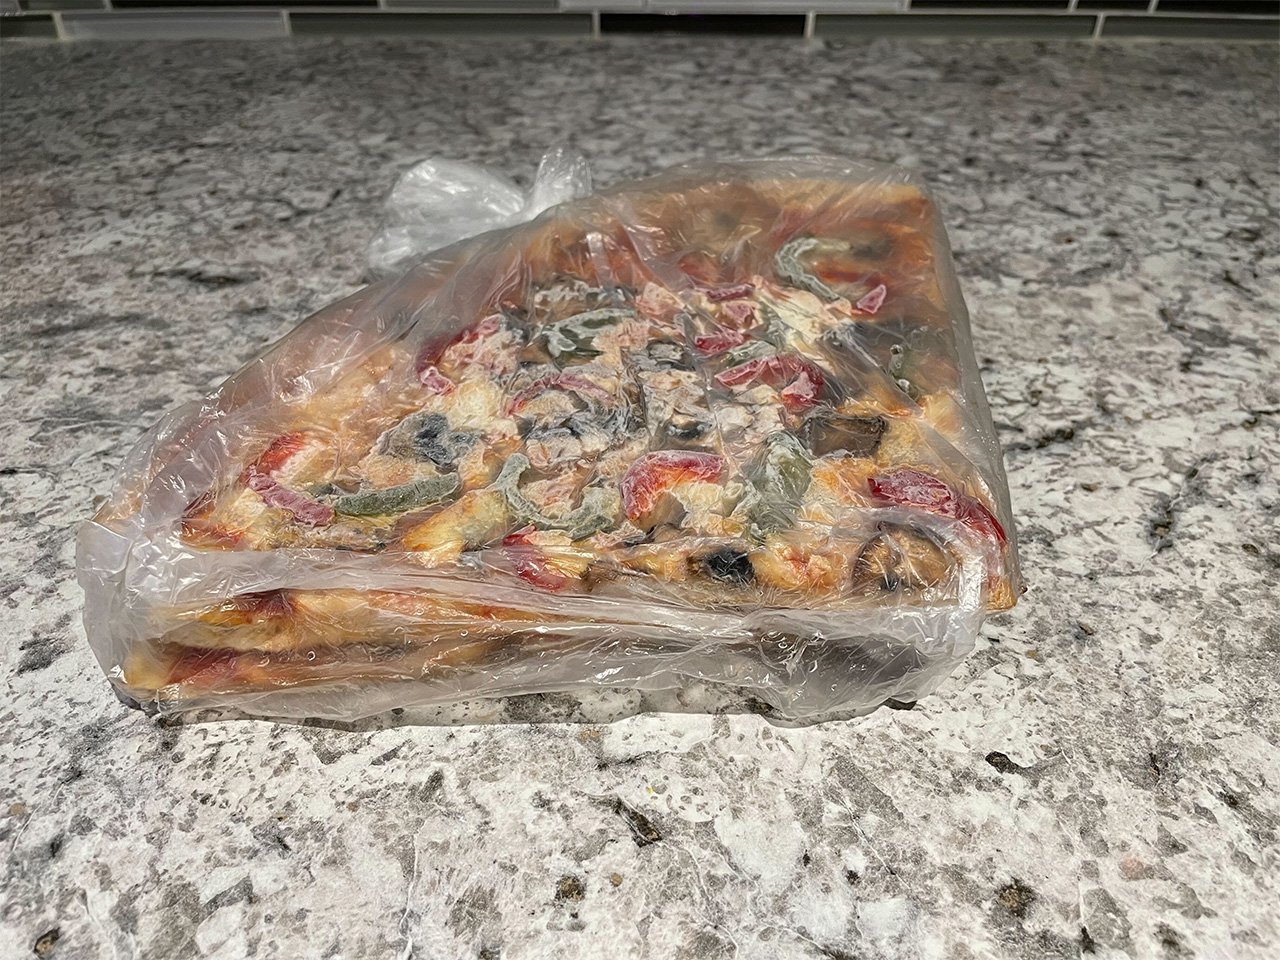 Slice of Toronto pizzas on a kitchen counter